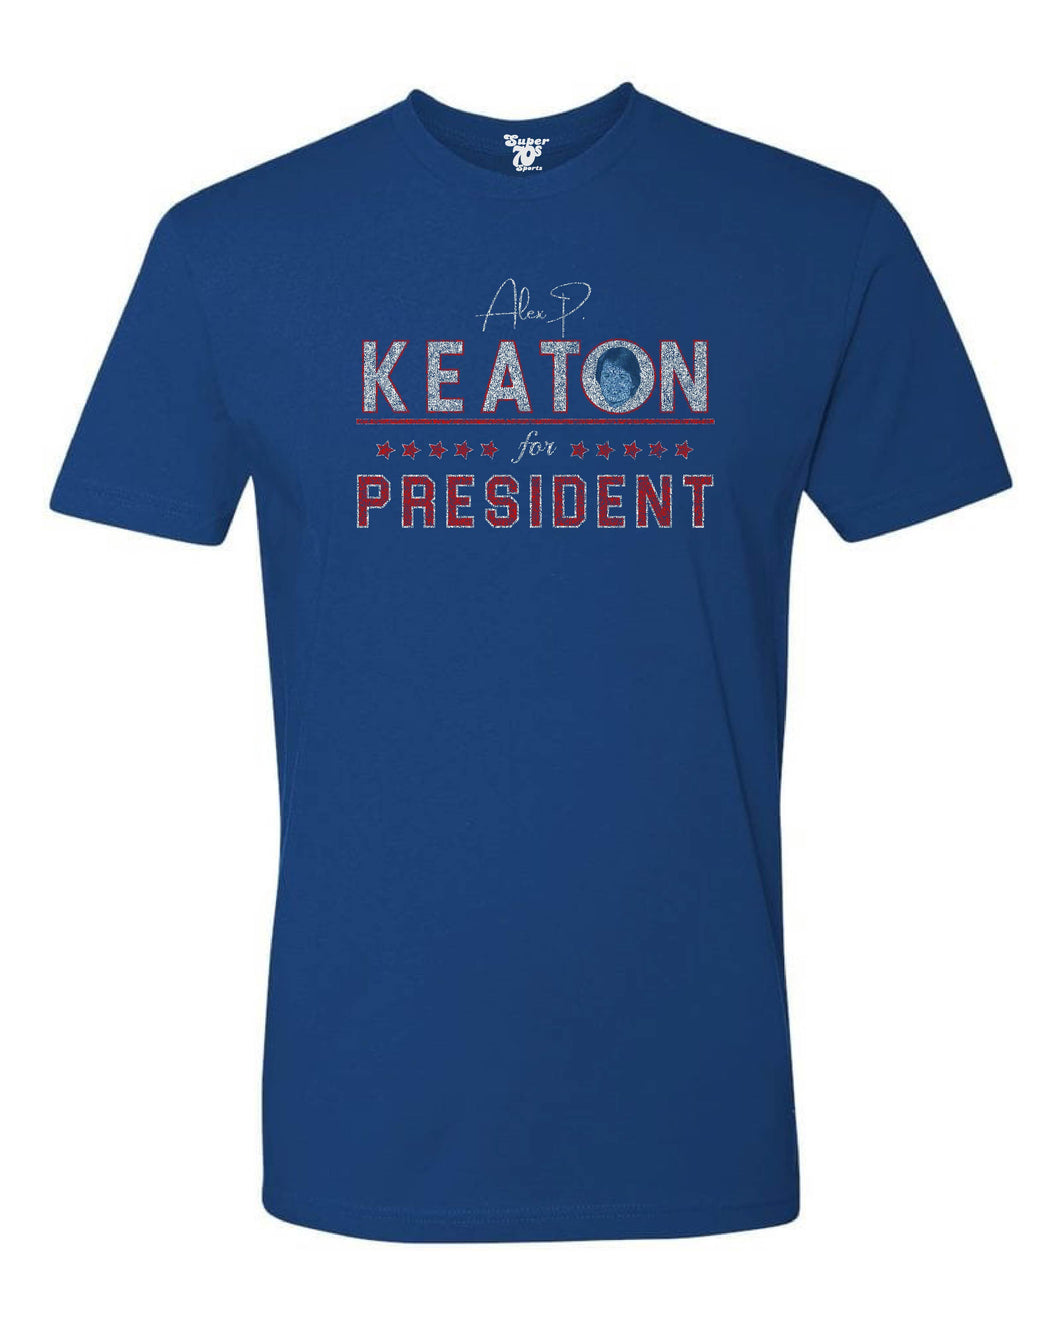 Keaton for President Tee